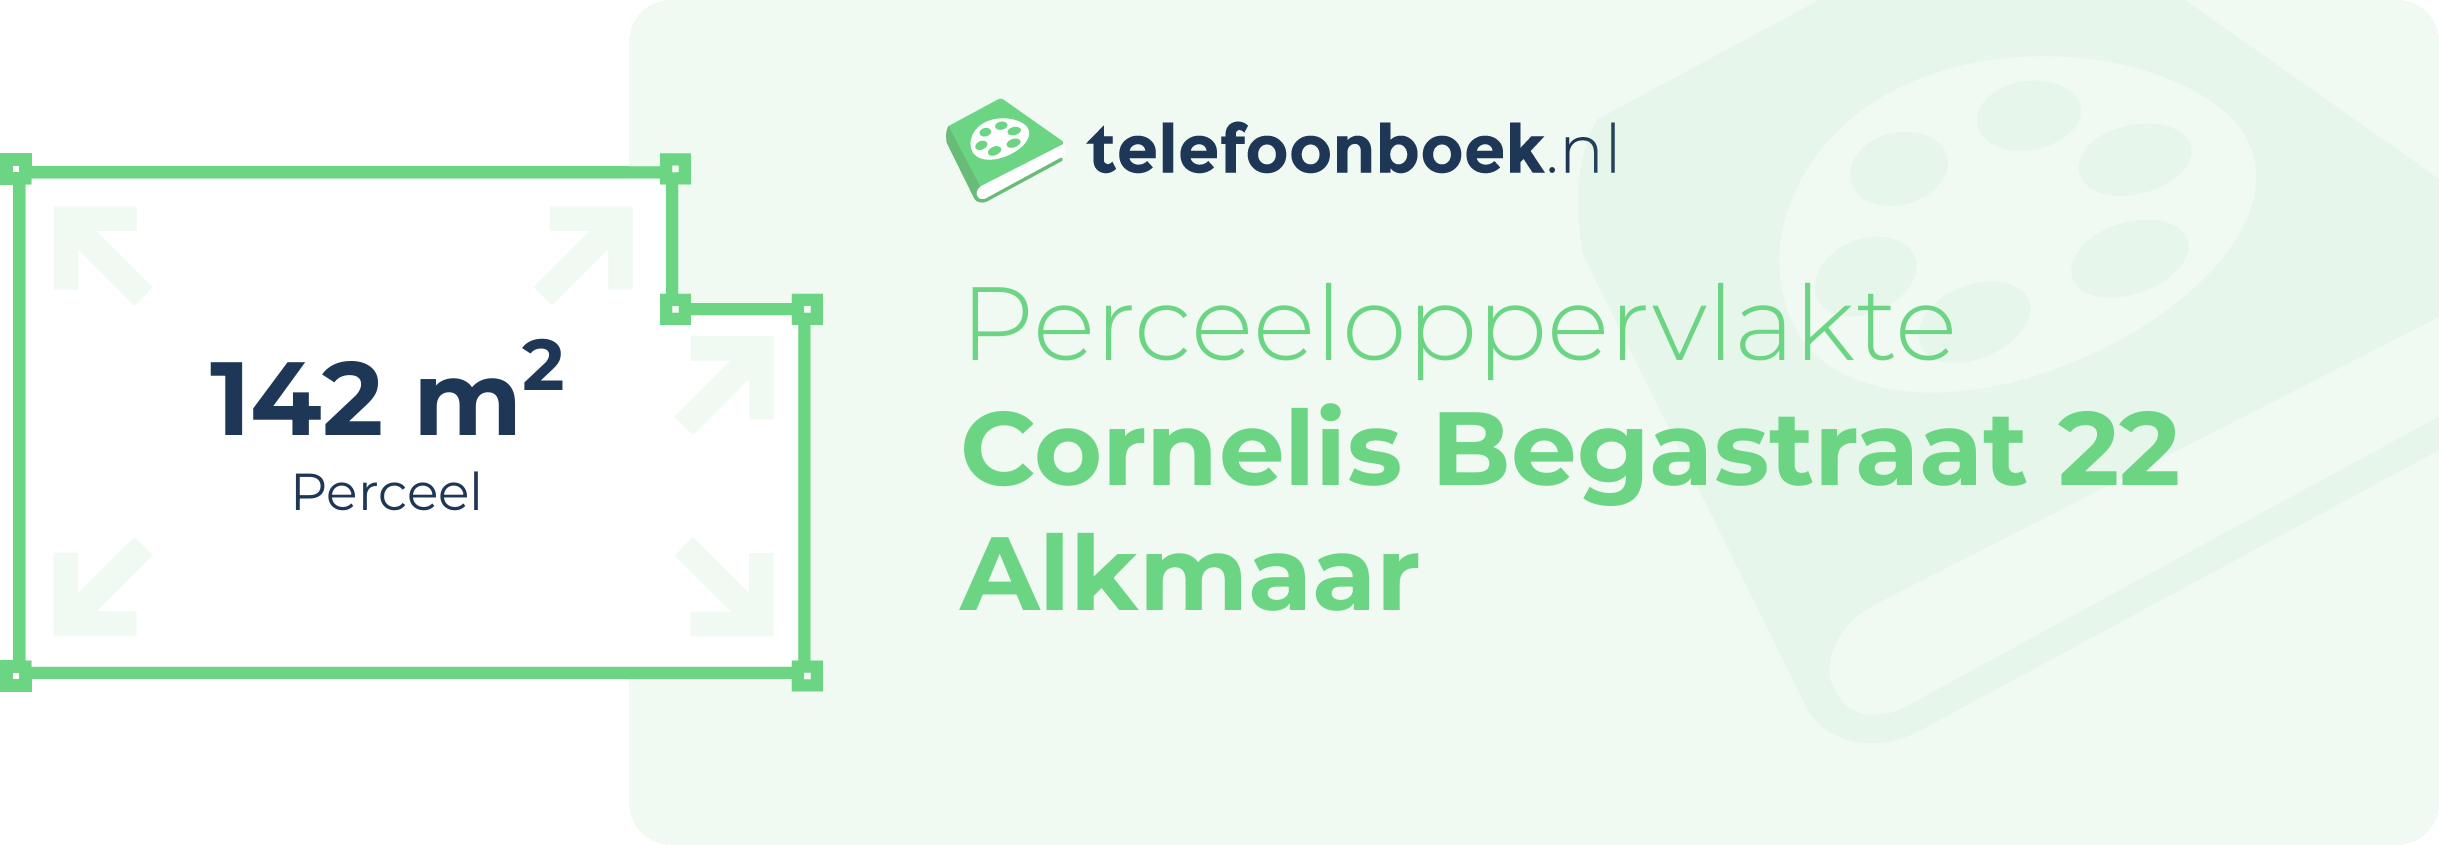 Perceeloppervlakte Cornelis Begastraat 22 Alkmaar